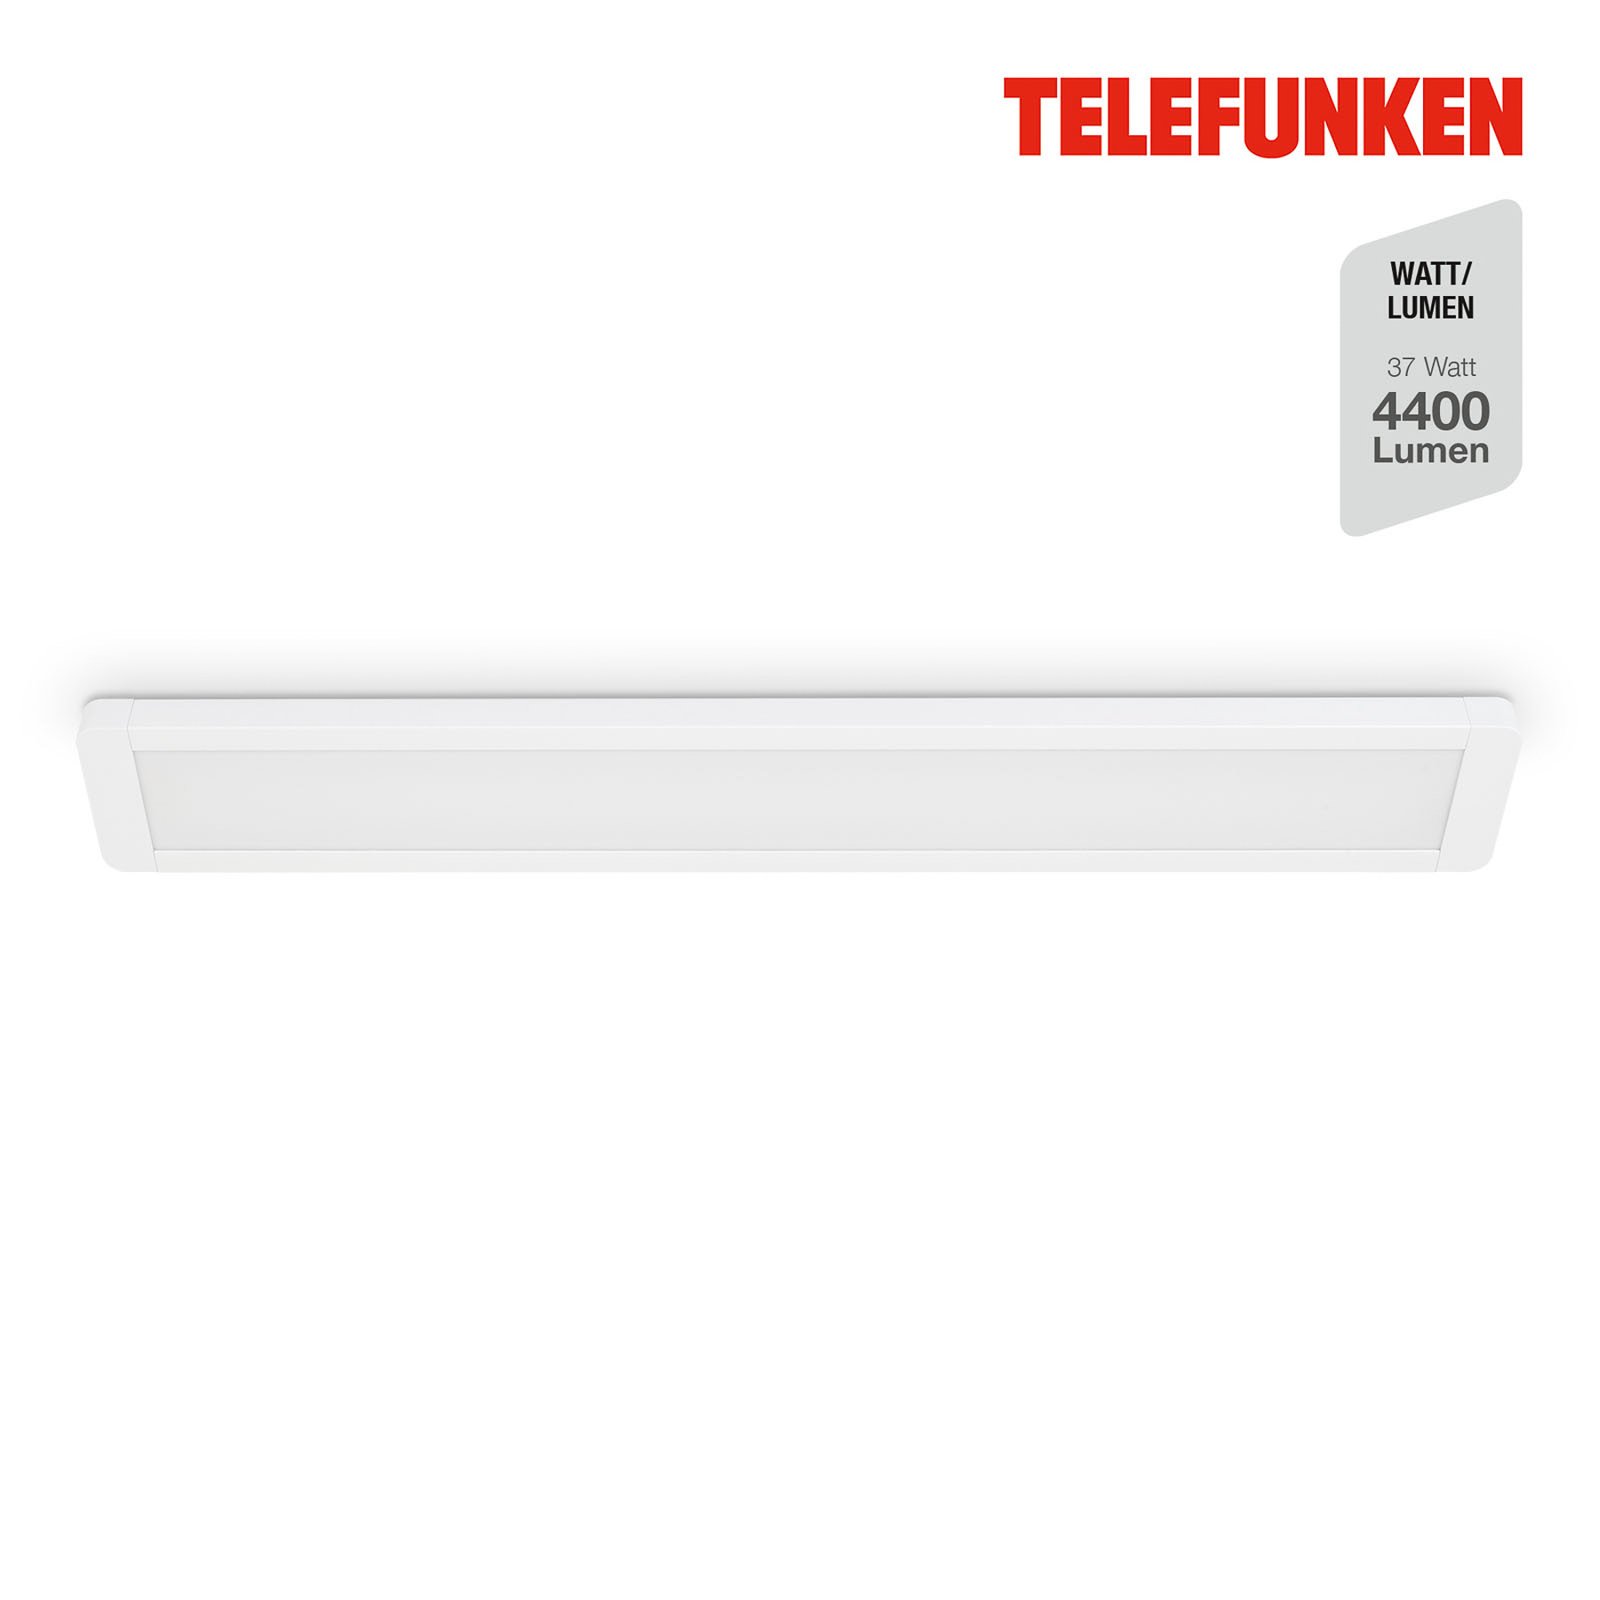 Poel LED mounting panel L 91.5 cm 37 W, white 840